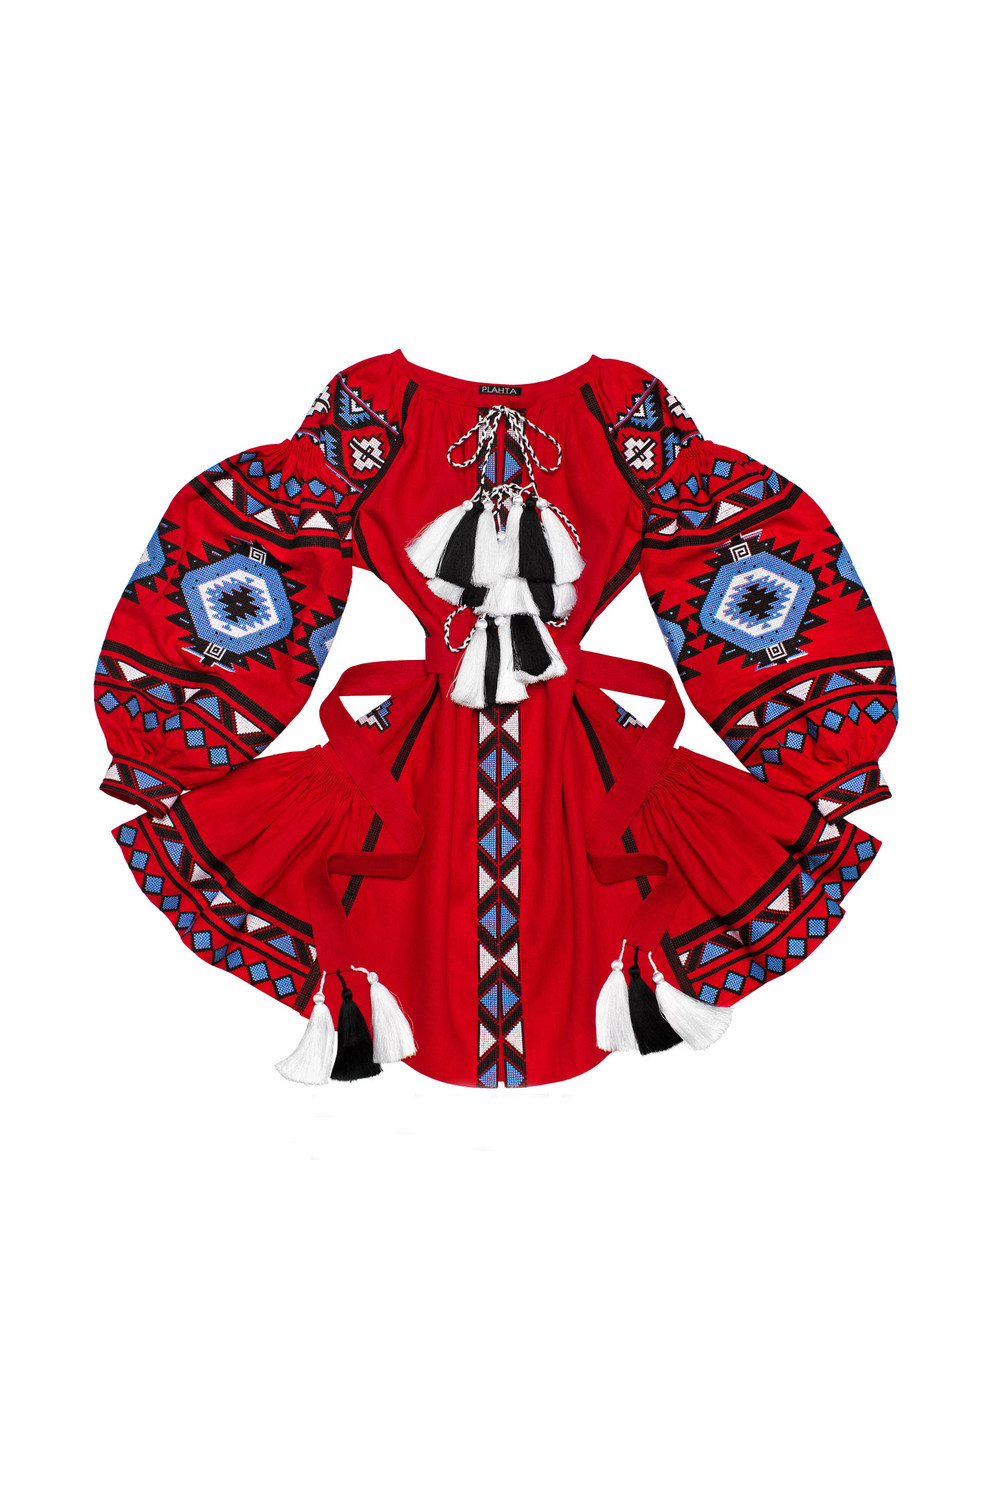 Buy Ethnic Folk Festival Linen Red Ukrainian Vyshyvanka dress, Boho Hippie Comfortable embroidered dress